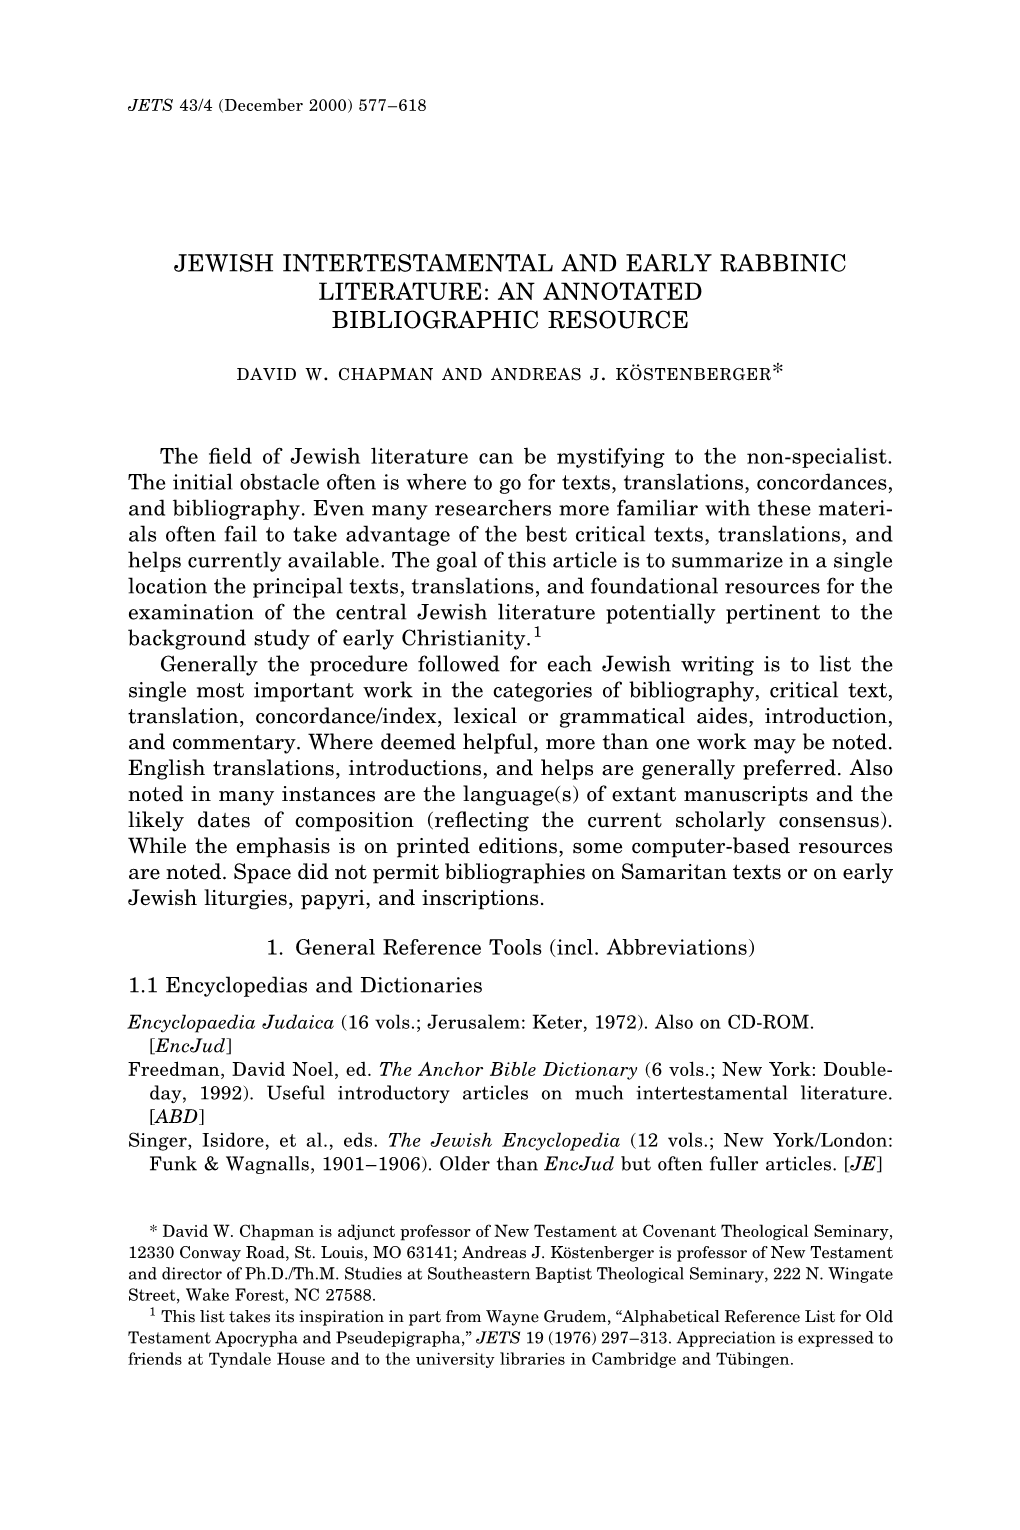 Jewish Intertestamental and Early Rabbinic Literature: an Annotated Bibliographic Resource David W